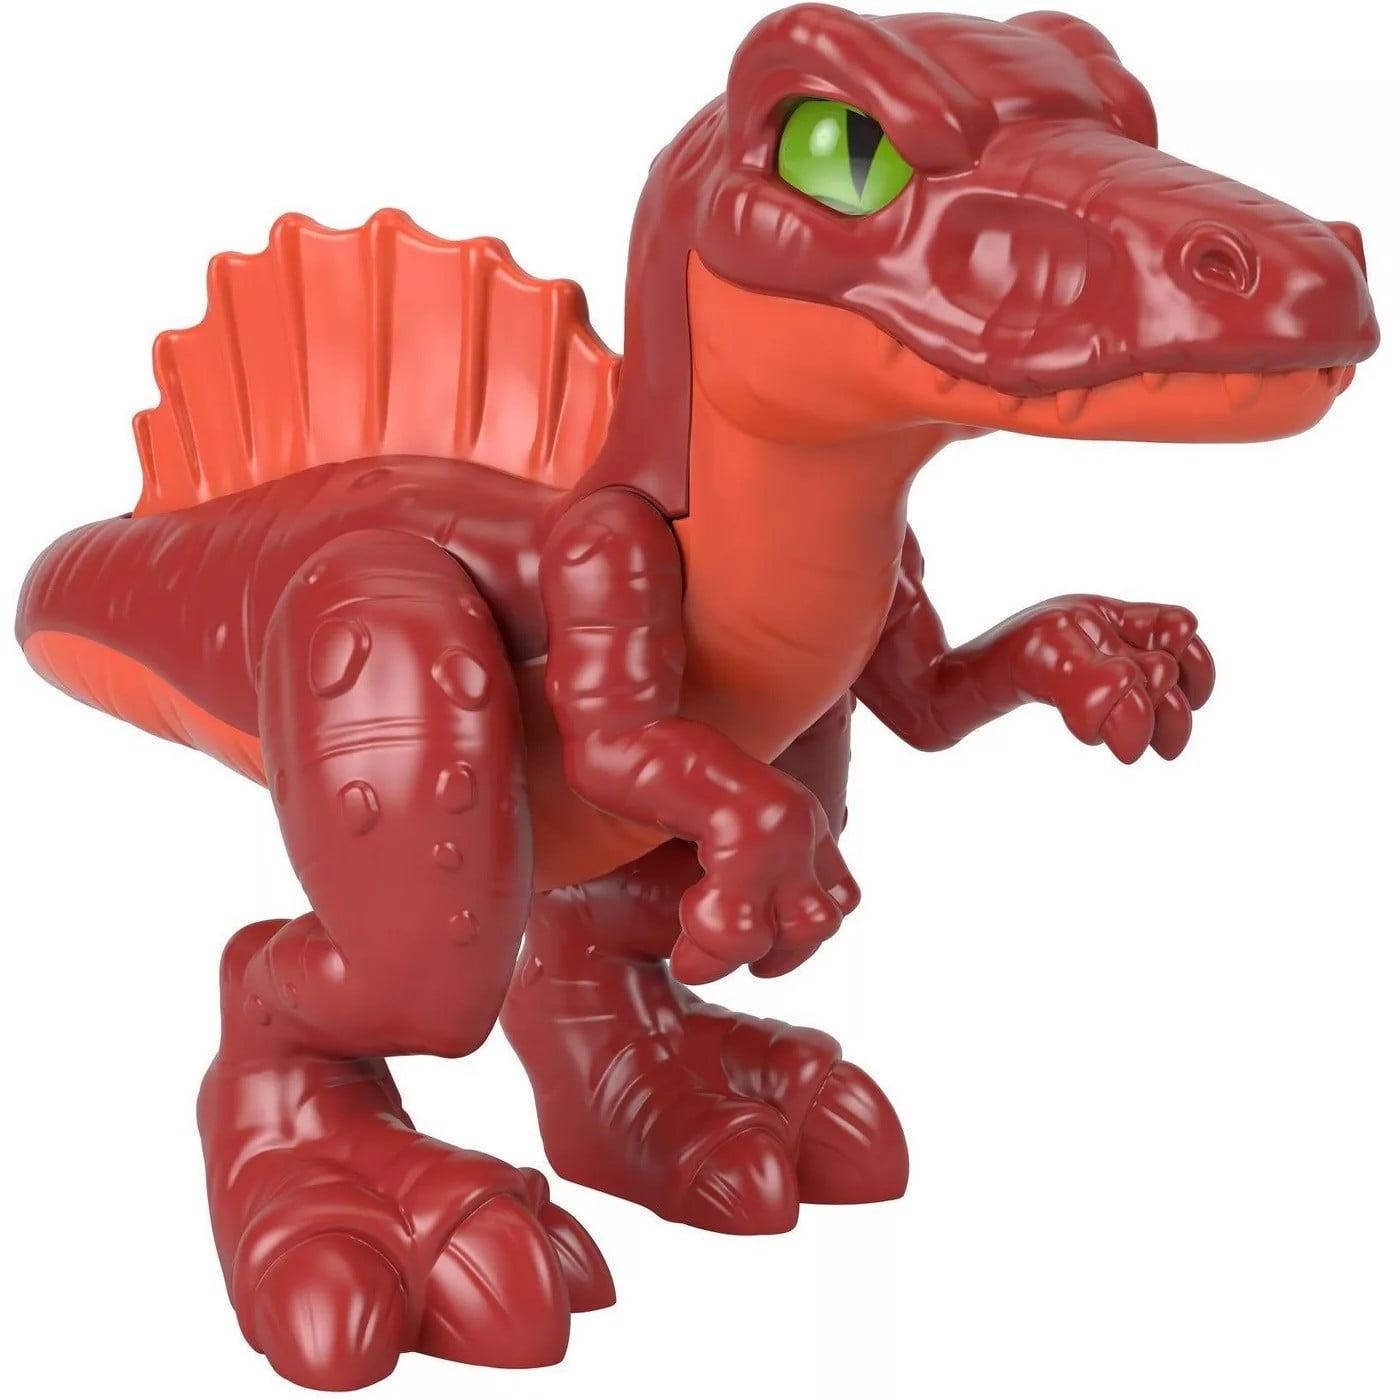 Details about   2019 Mattel Imaginext Jurassic World Stegosaurus Egg Mini Dinosaur Toy Figure 